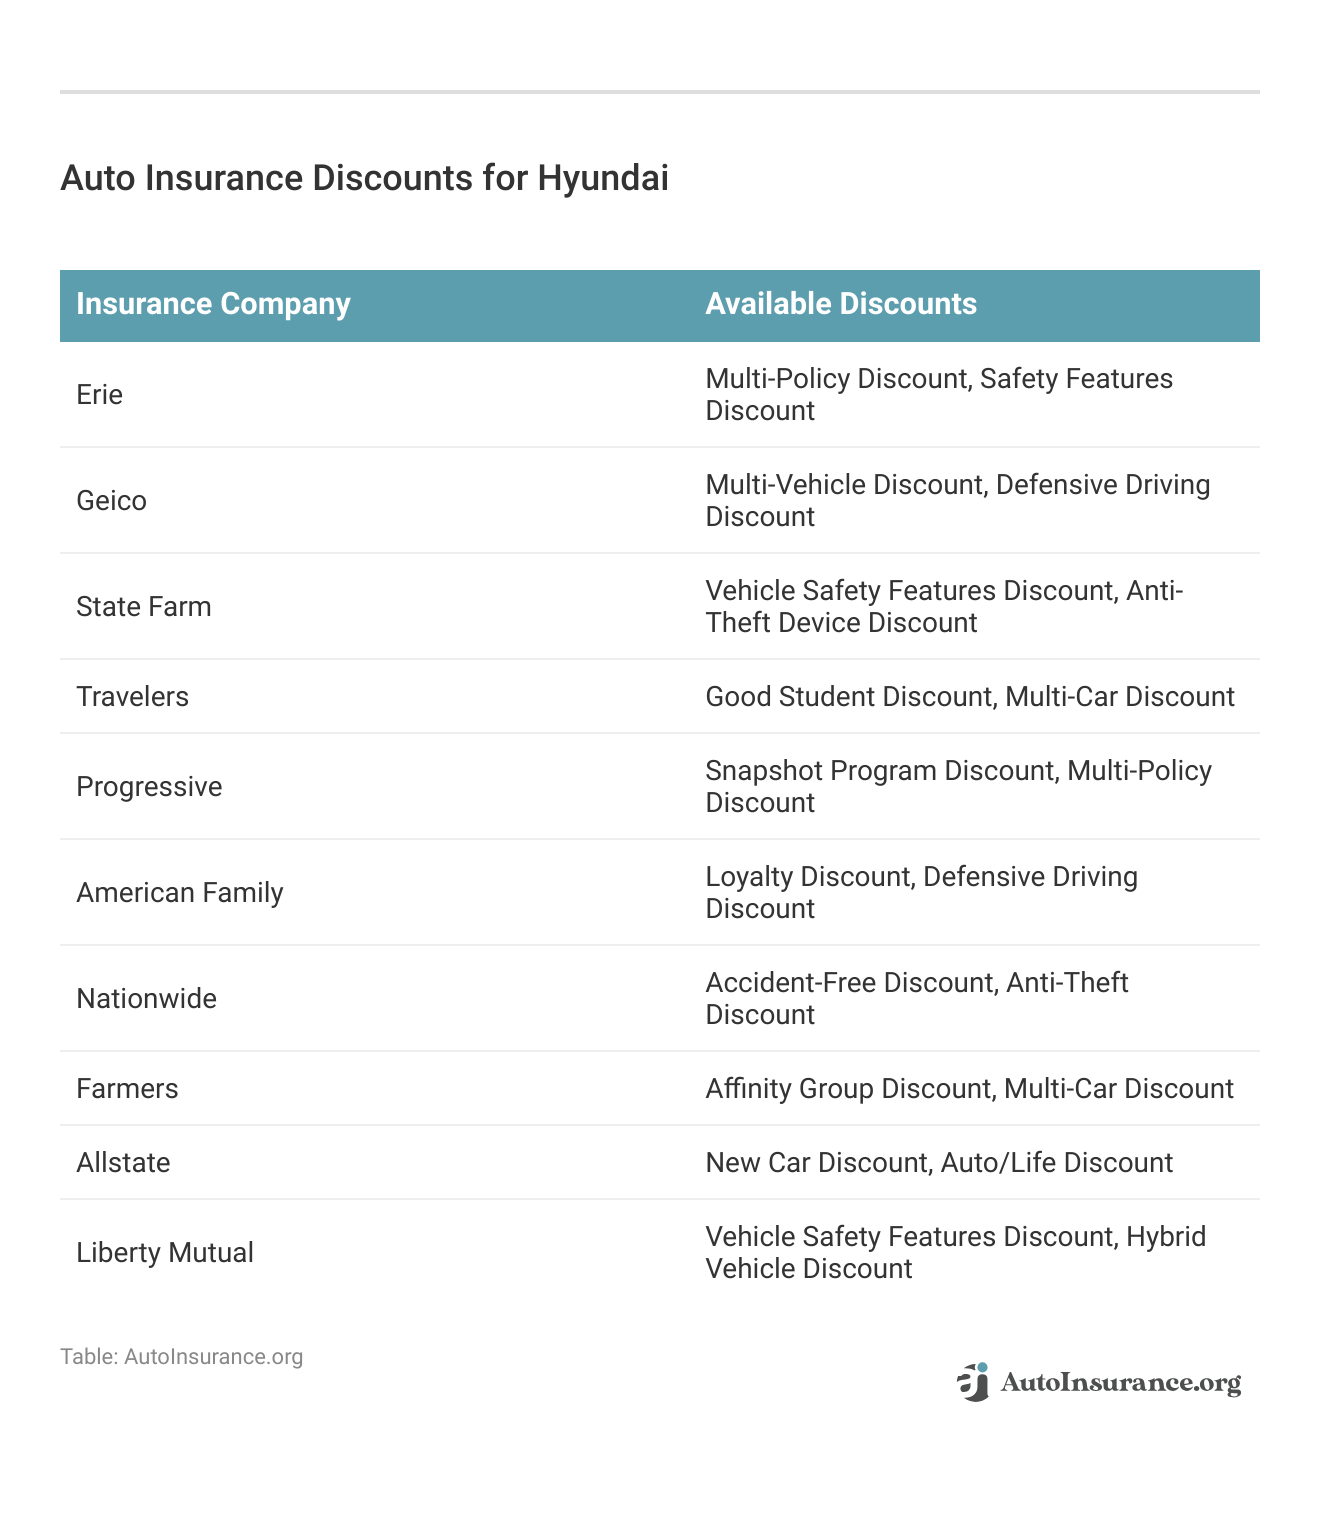 <h3>Auto Insurance Discounts for Hyundai</h3>